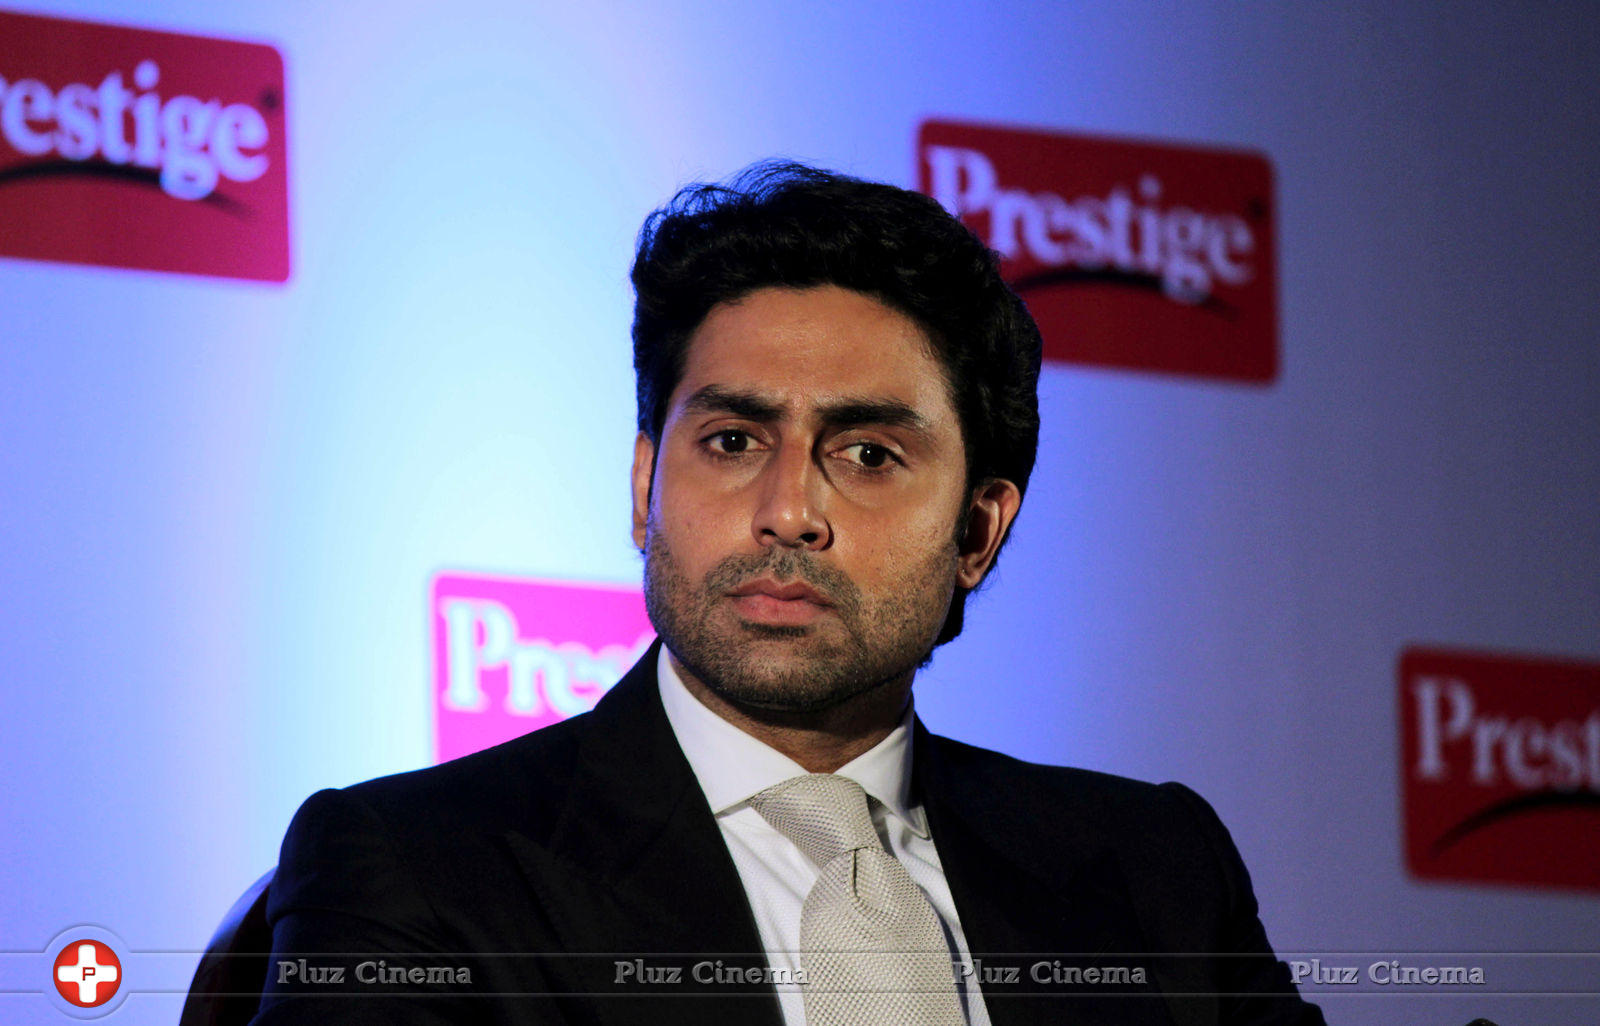 Abhishek Bachchan - TTK Prestige signs Aishwarya, Abhishek as brand ambassadors photos | Picture 592239